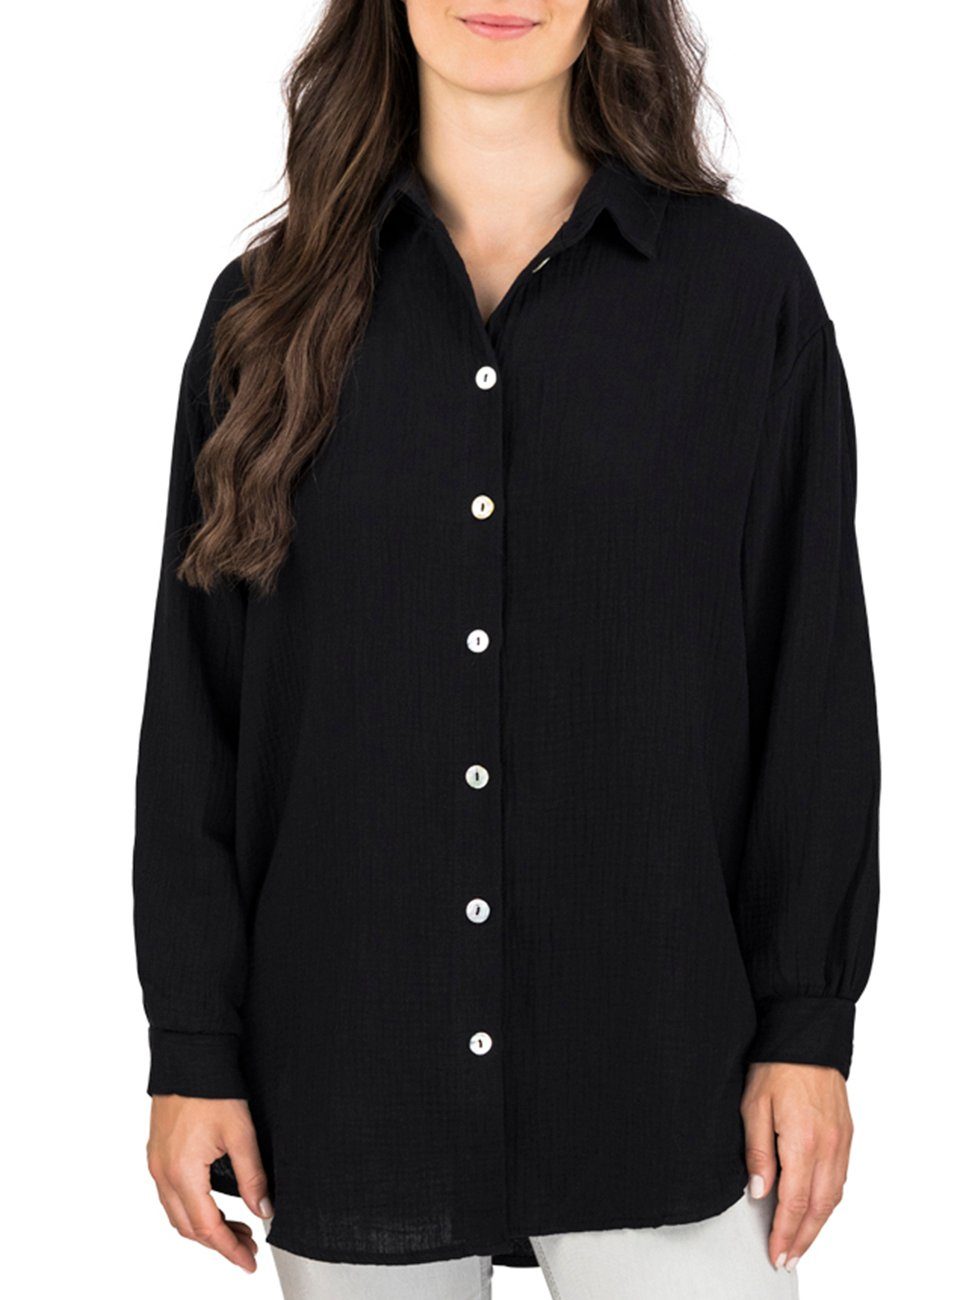 Hemd (64000) Oversize Black aus Hemdbluse Damen 100% DFMathilda Basic Bluse DENIMFY Baumwolle Musselin Fit